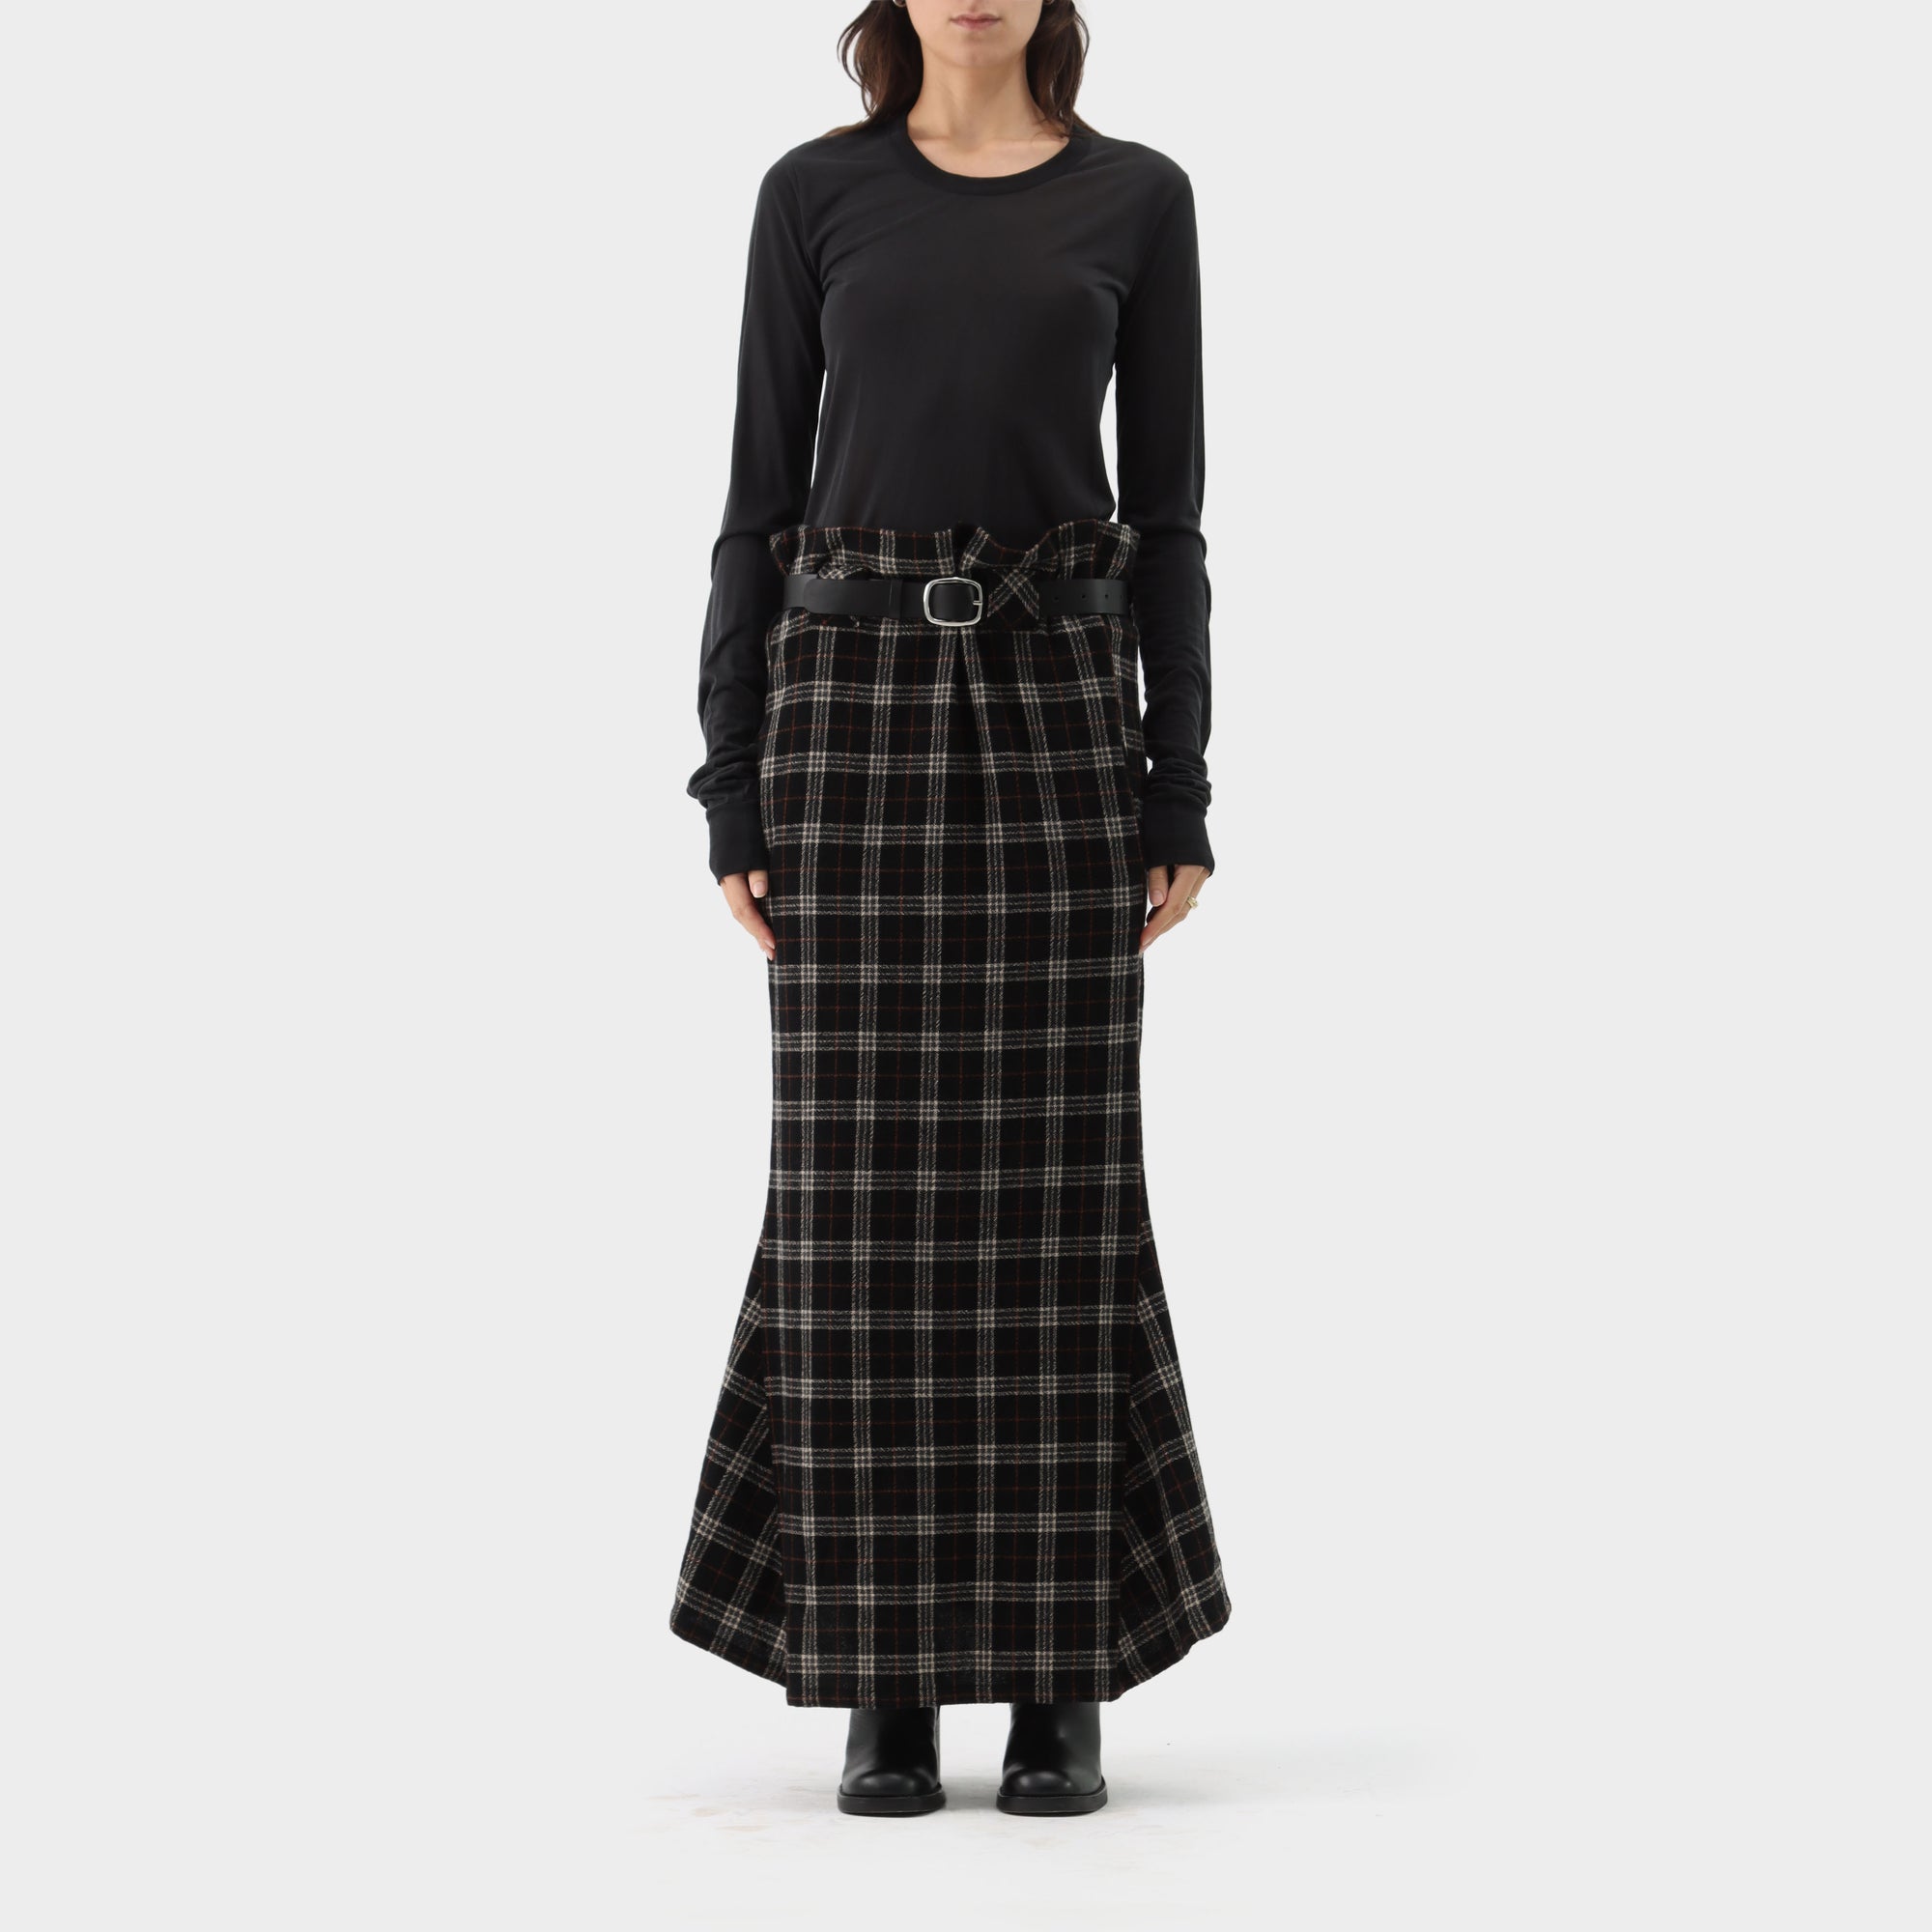 Y's Yohji Yamamoto Plaid Wool Skirt